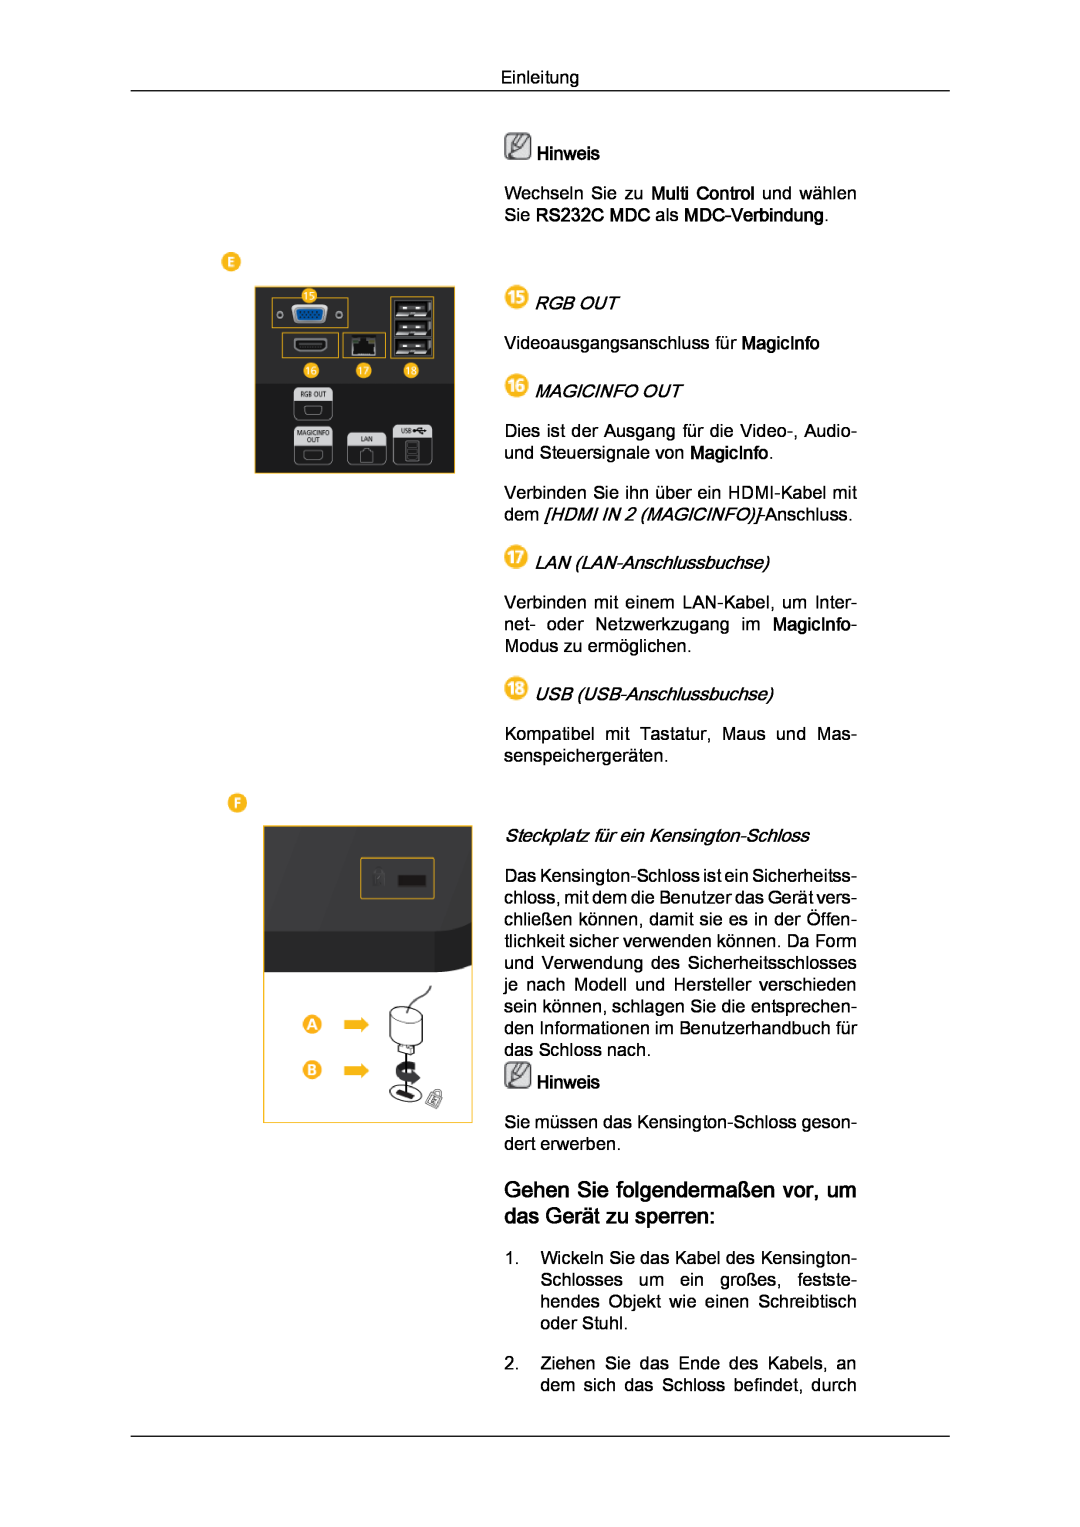 Samsung LH32CRTMBC/EN manual Gehen Sie folgendermaßen vor, um das Gerät zu sperren, Hinweis, Rgb Out, Magicinfo Out 